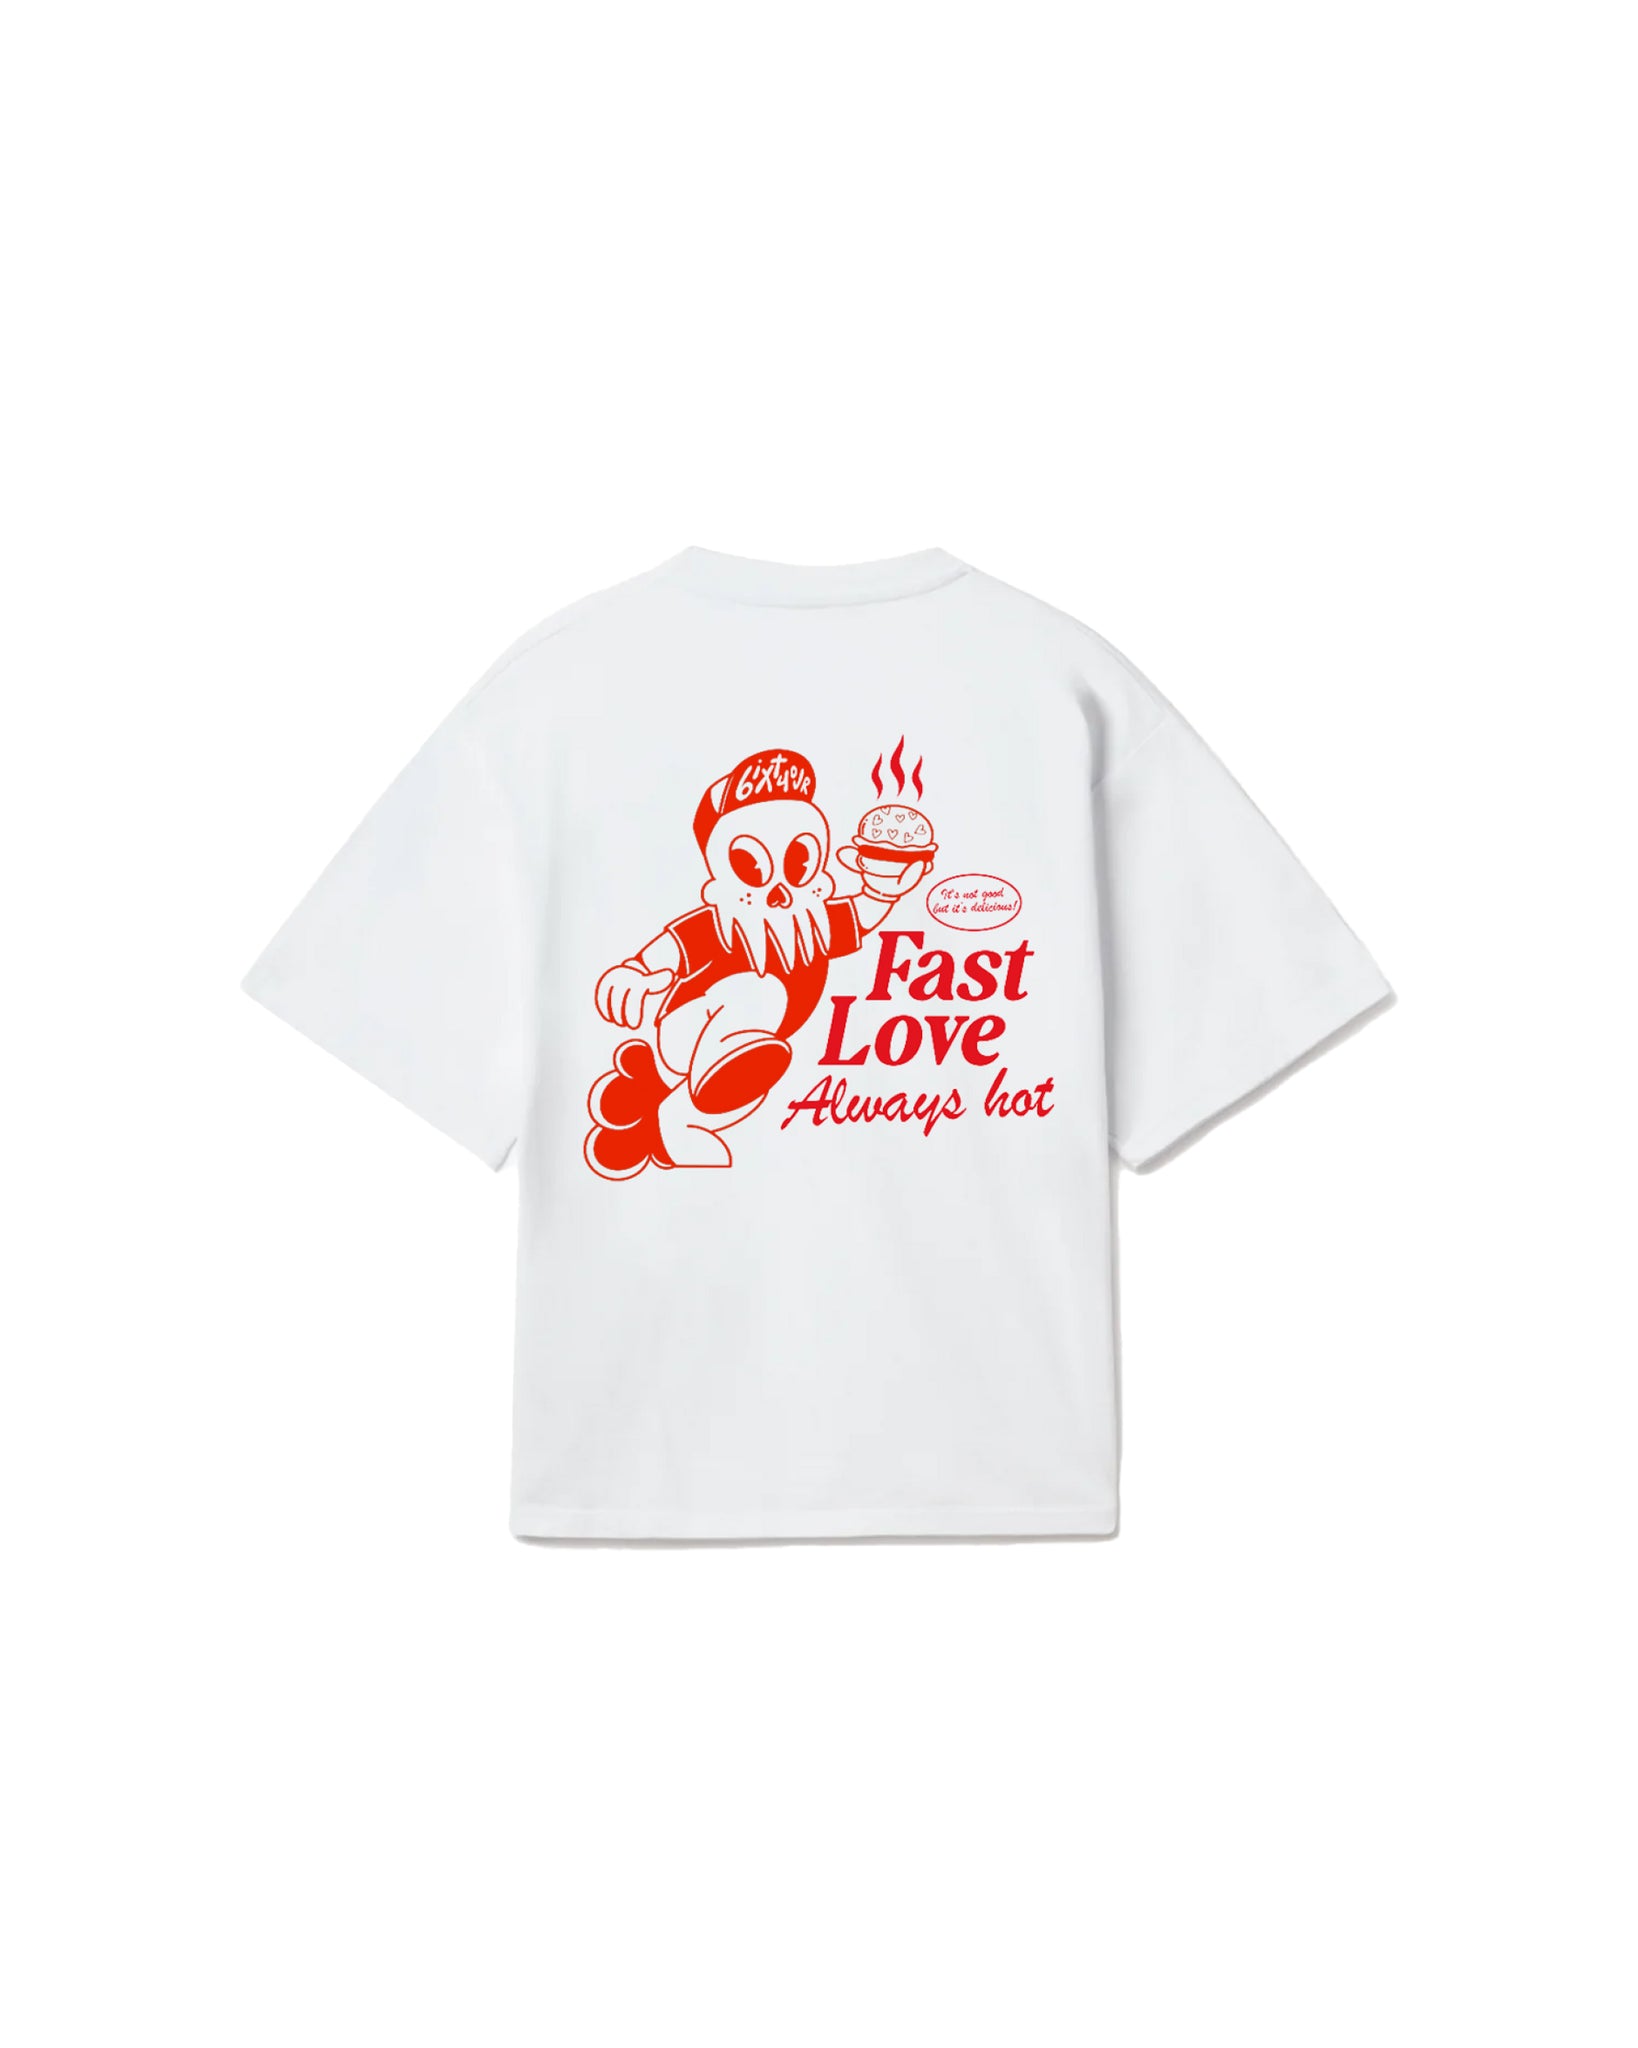 Fast love t-shirt